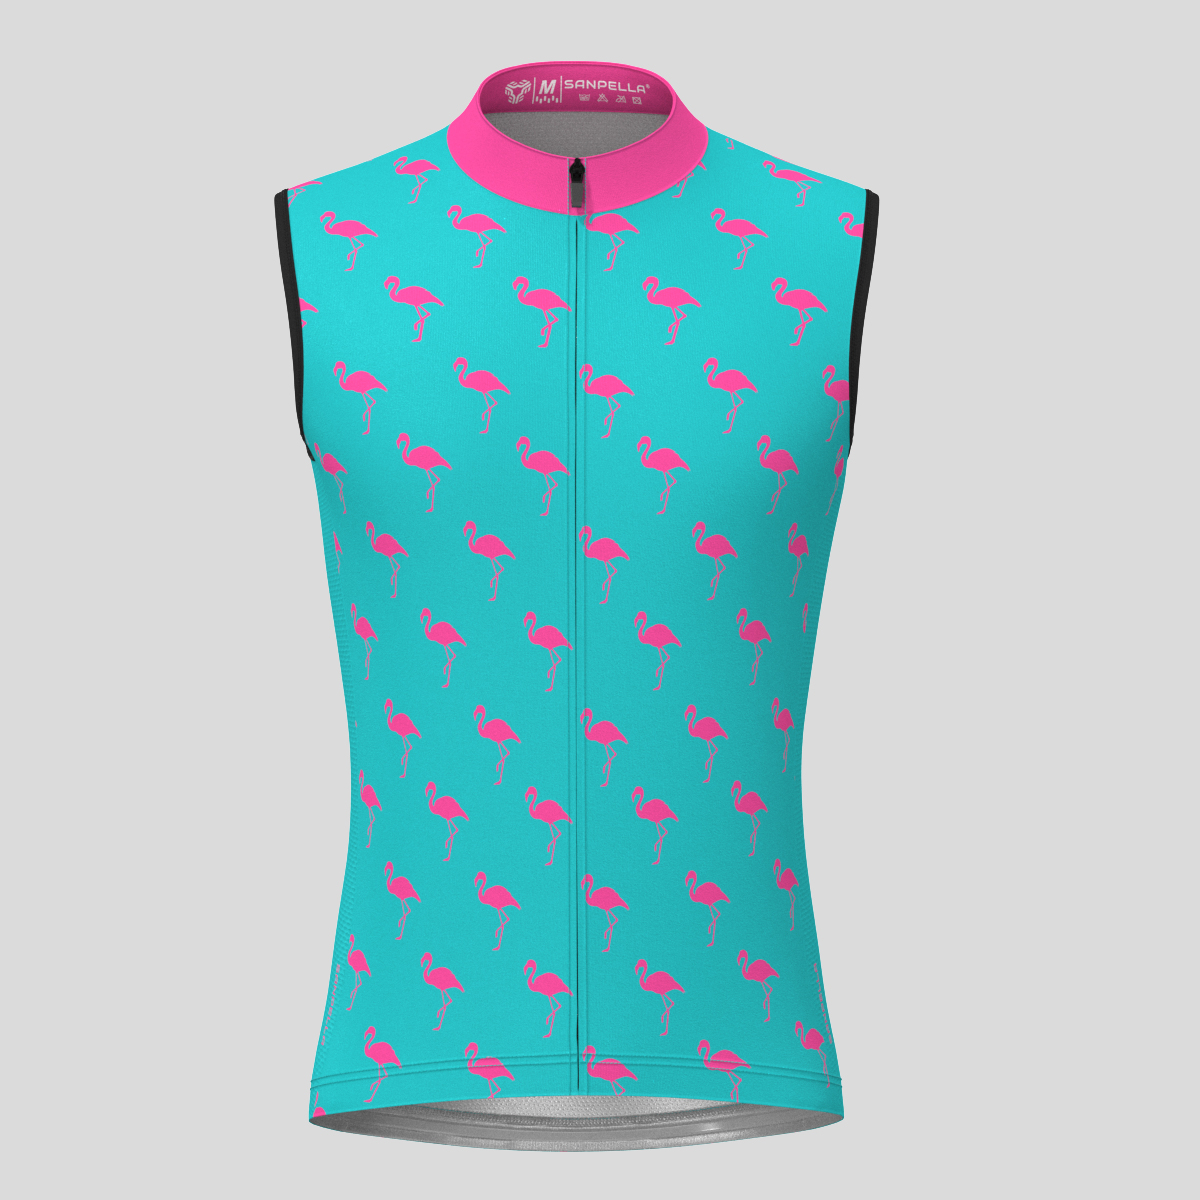 Flamingo Men's Sleeveless Cycling Jersey - Blue/Pink